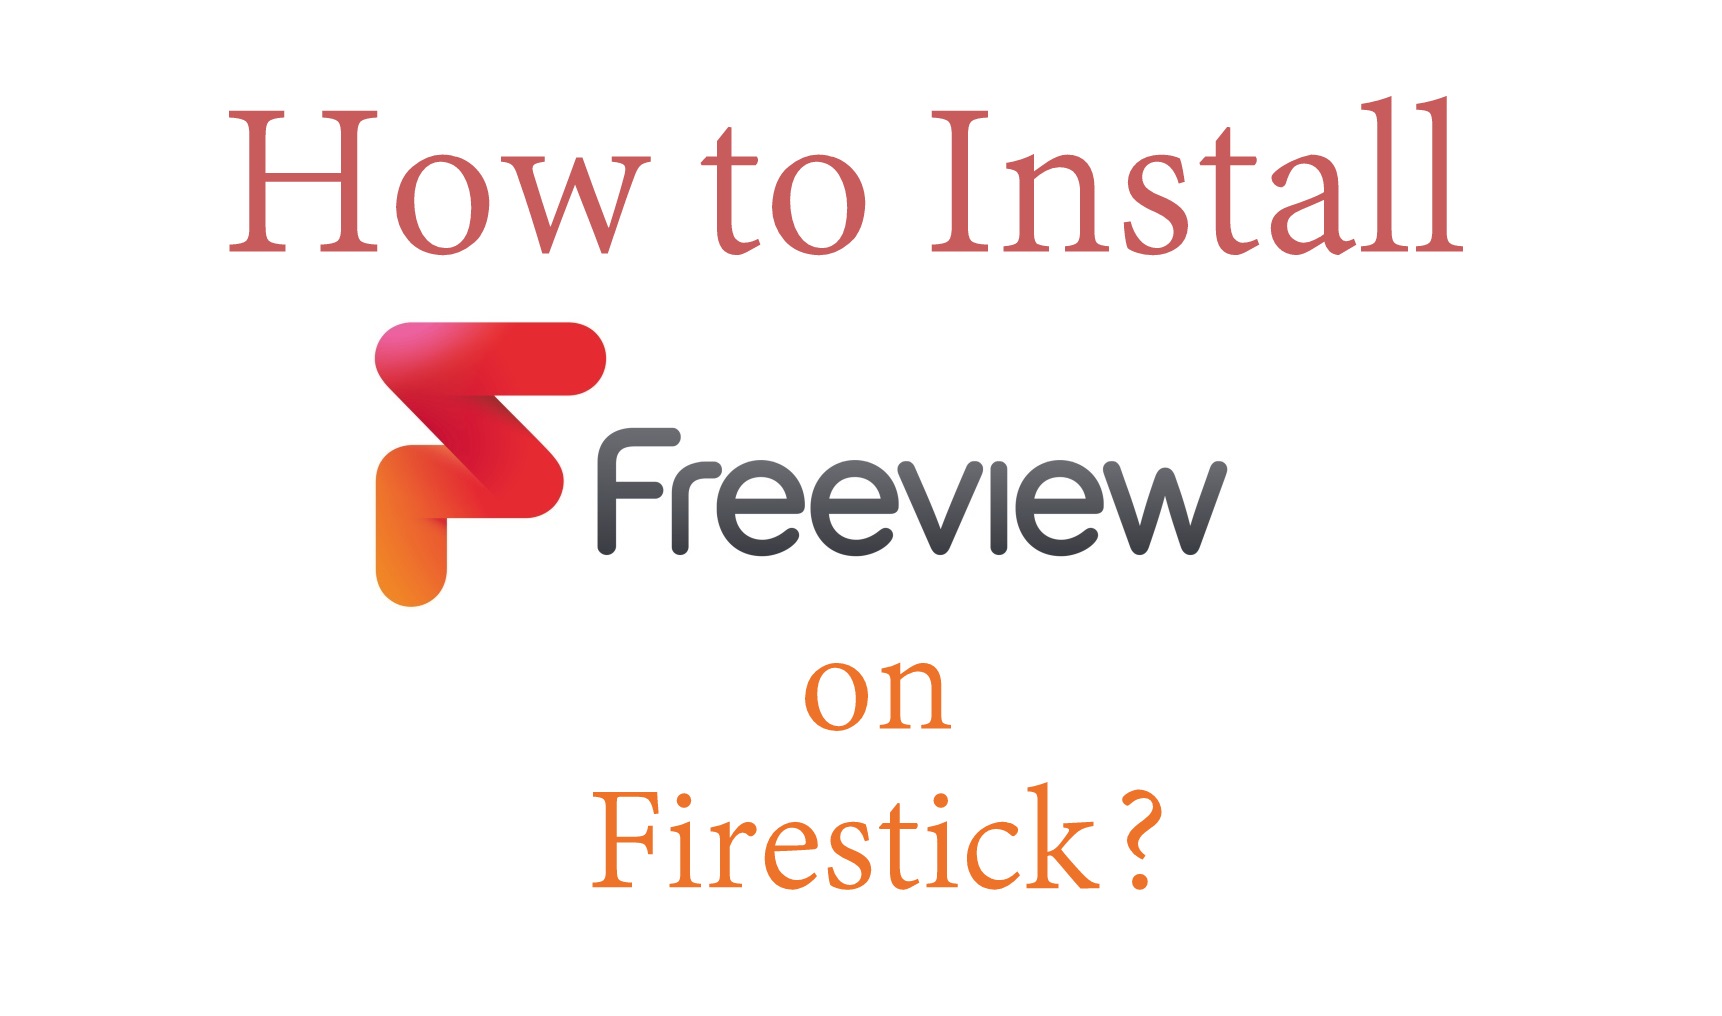 Cara menginstal Freeview di Firestick / Fire TV [2020] 2